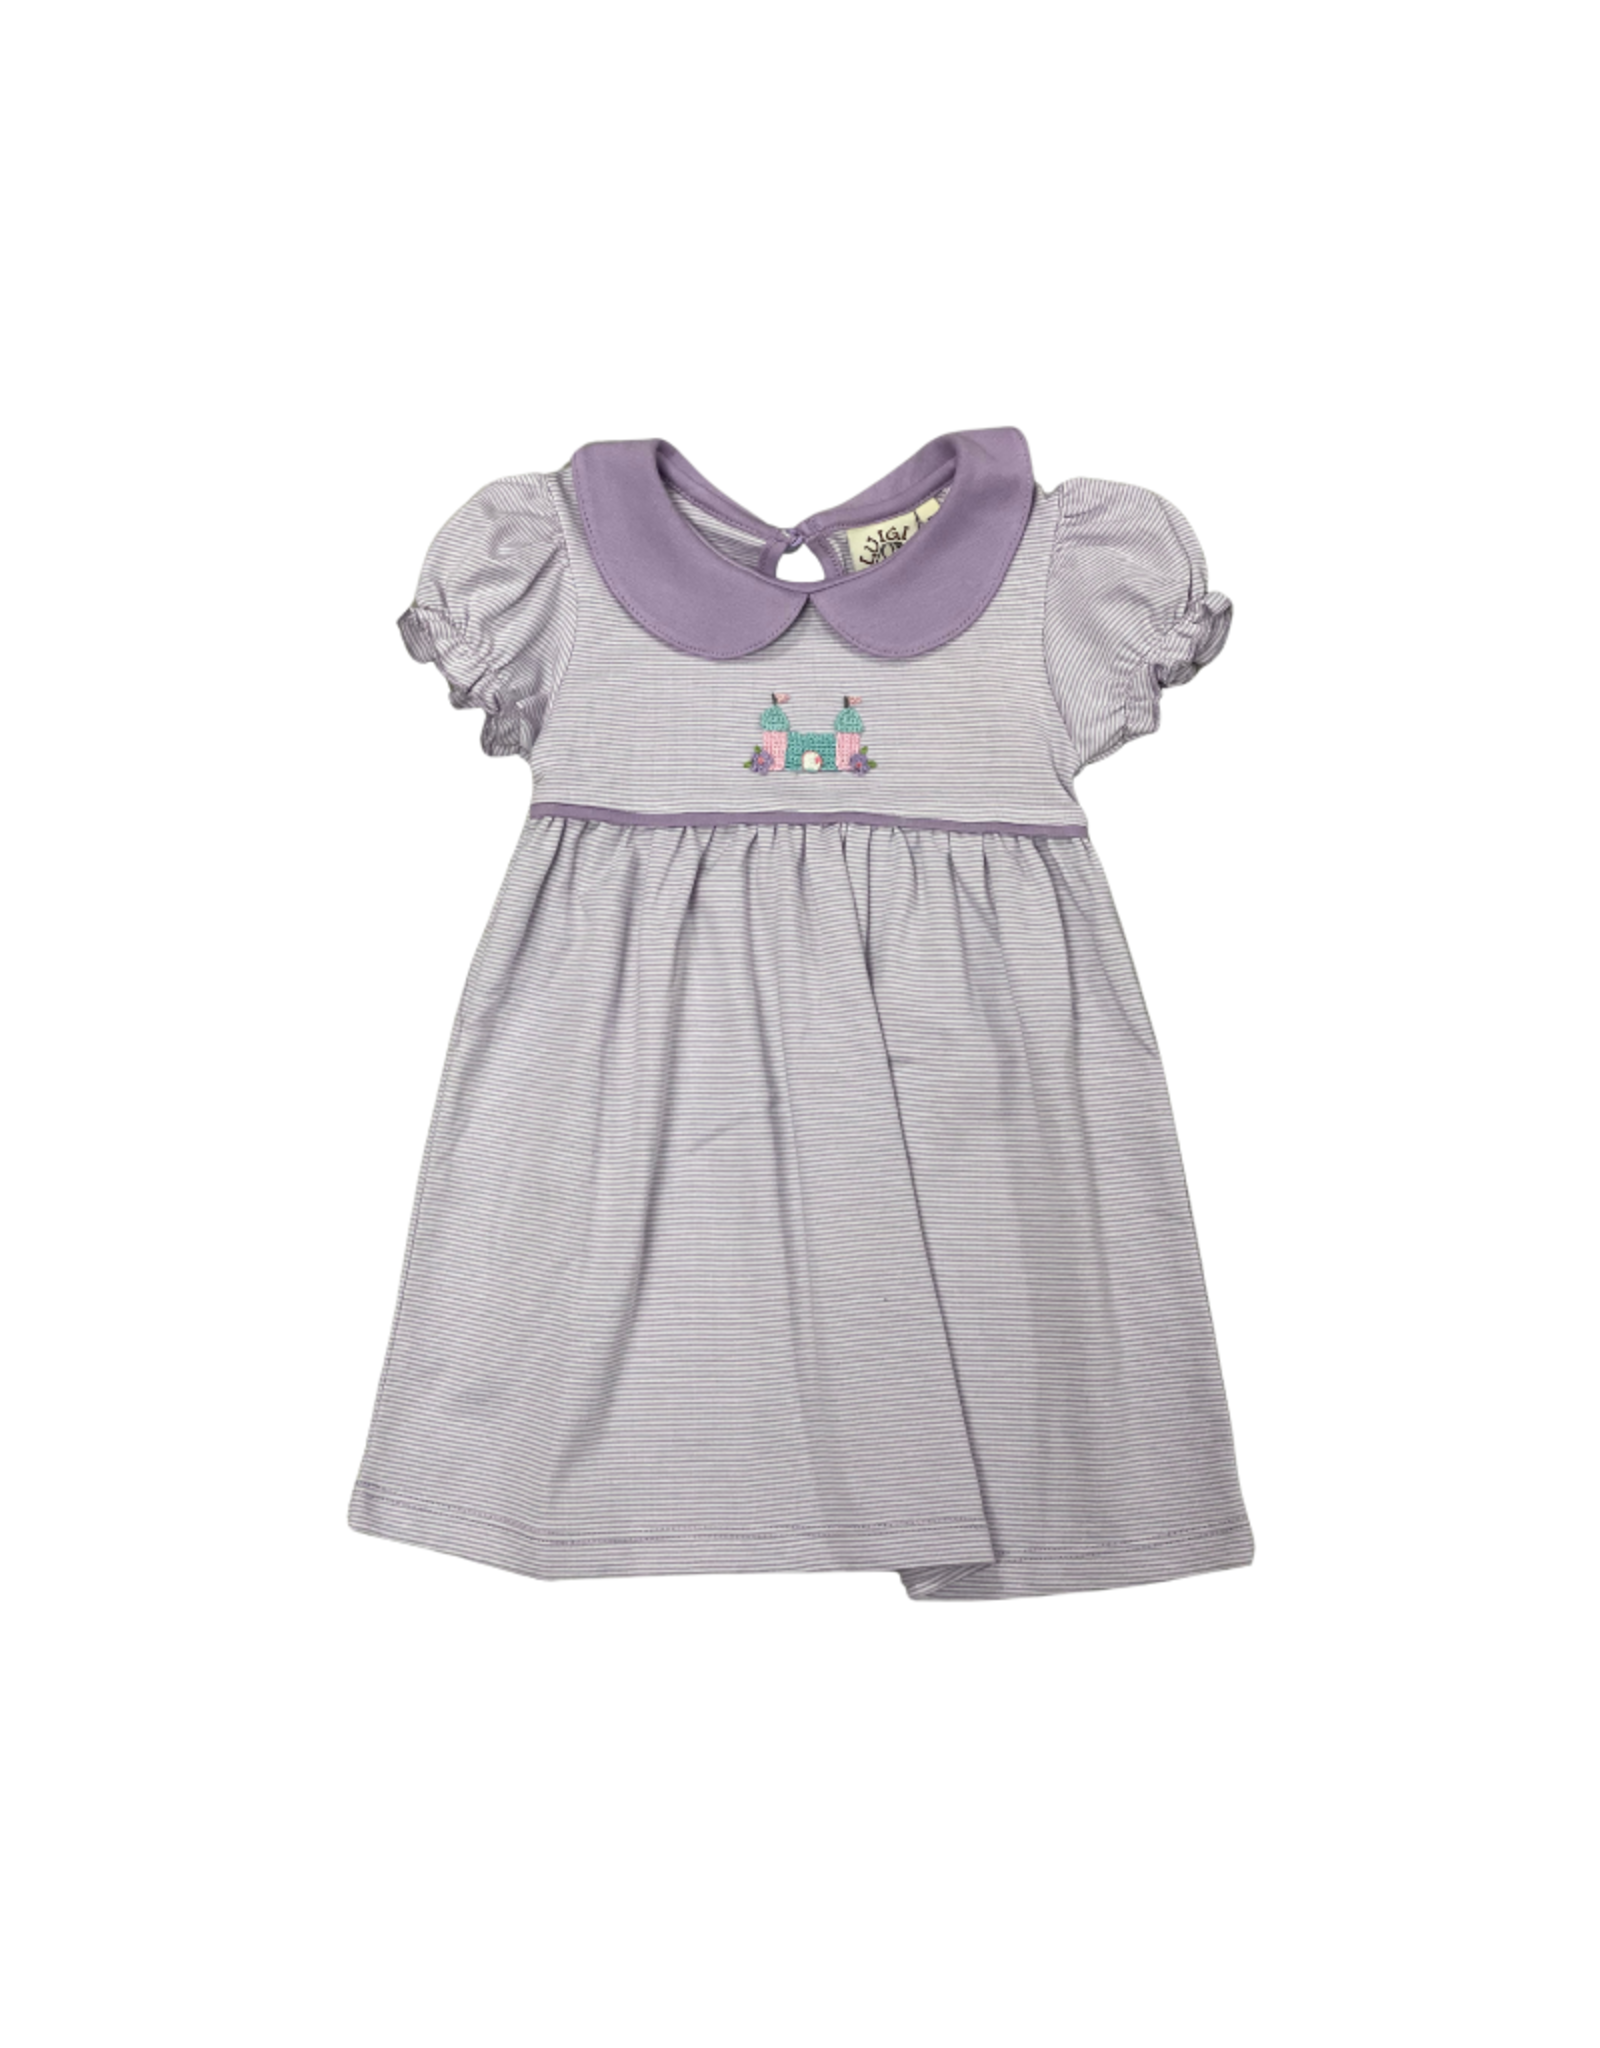 Luigi Lavender & White Stripe Castle Dress